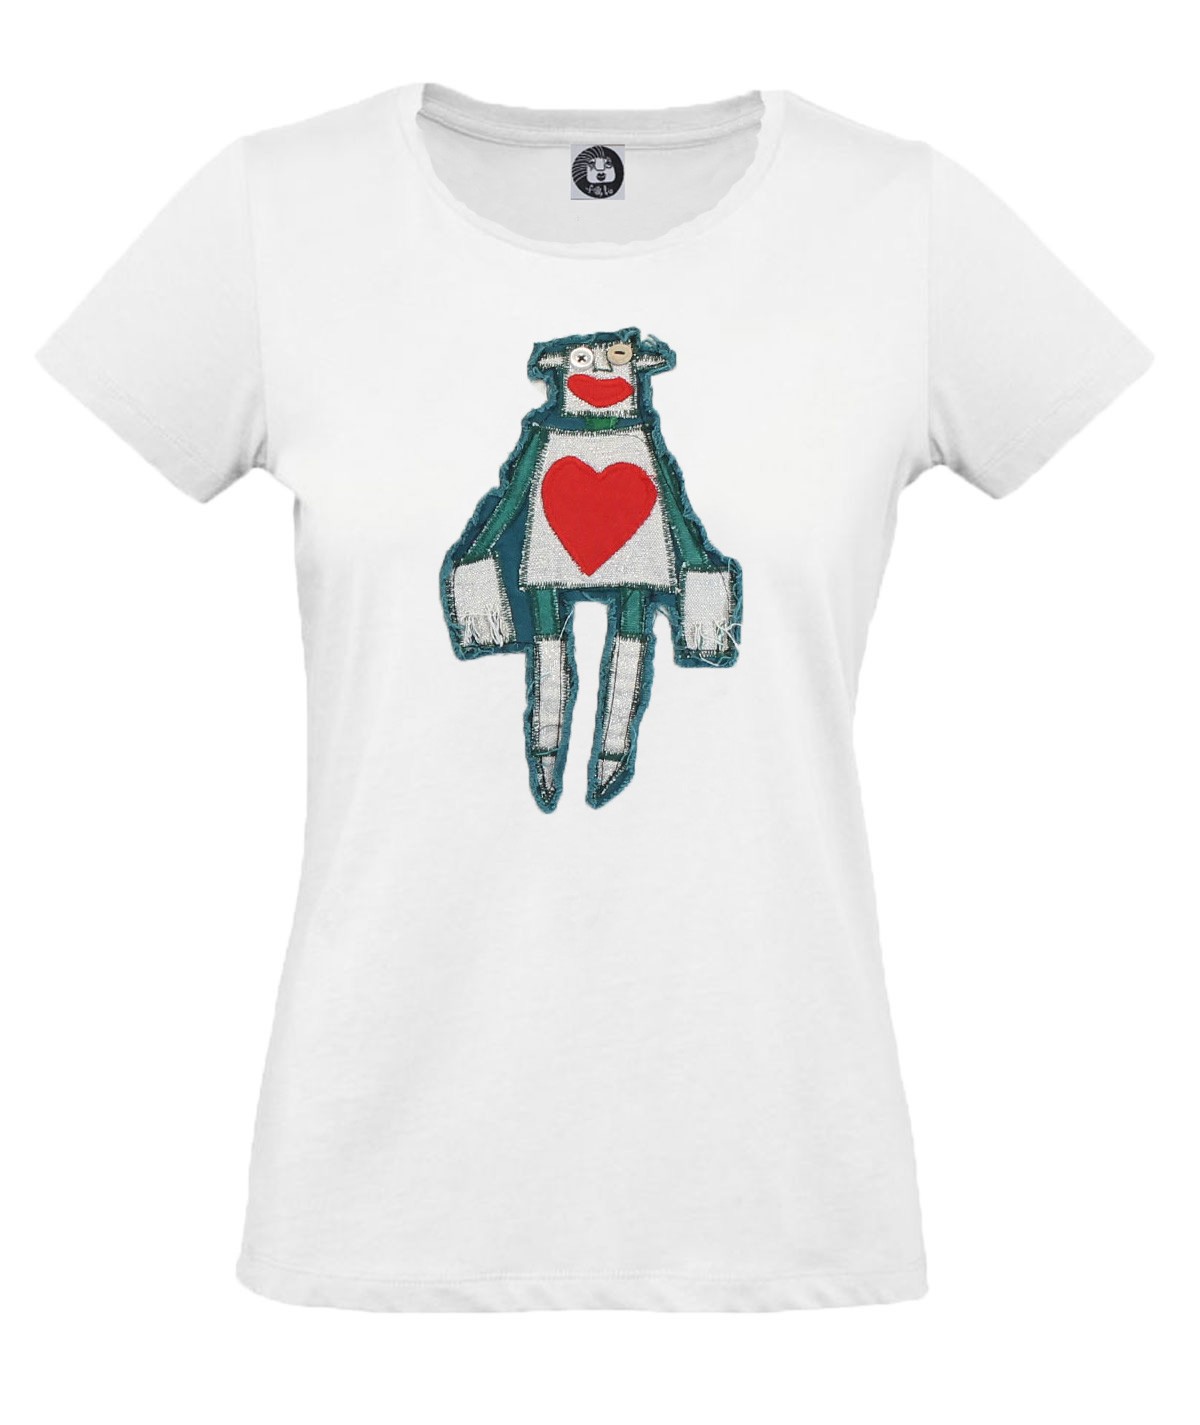 T-shirt robottino innamorato